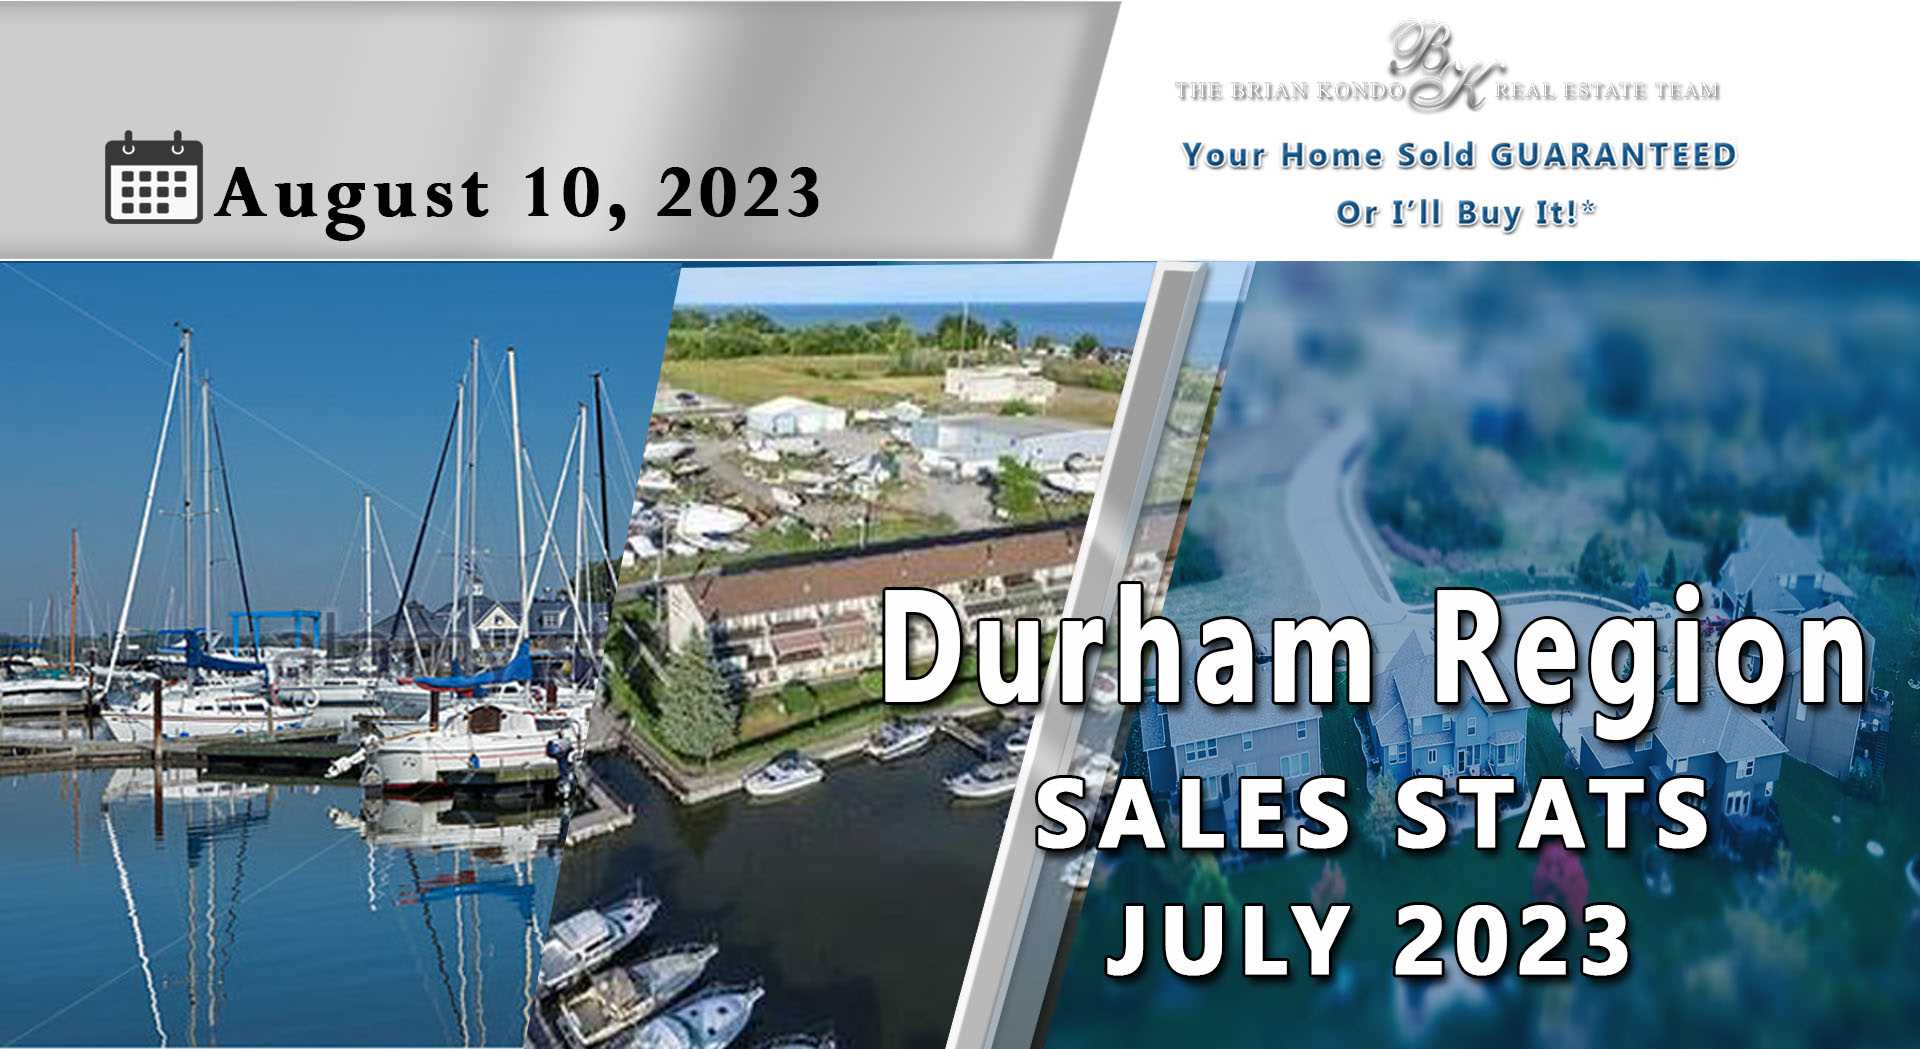 DURHAM REGION SALES STATS JULY 2023